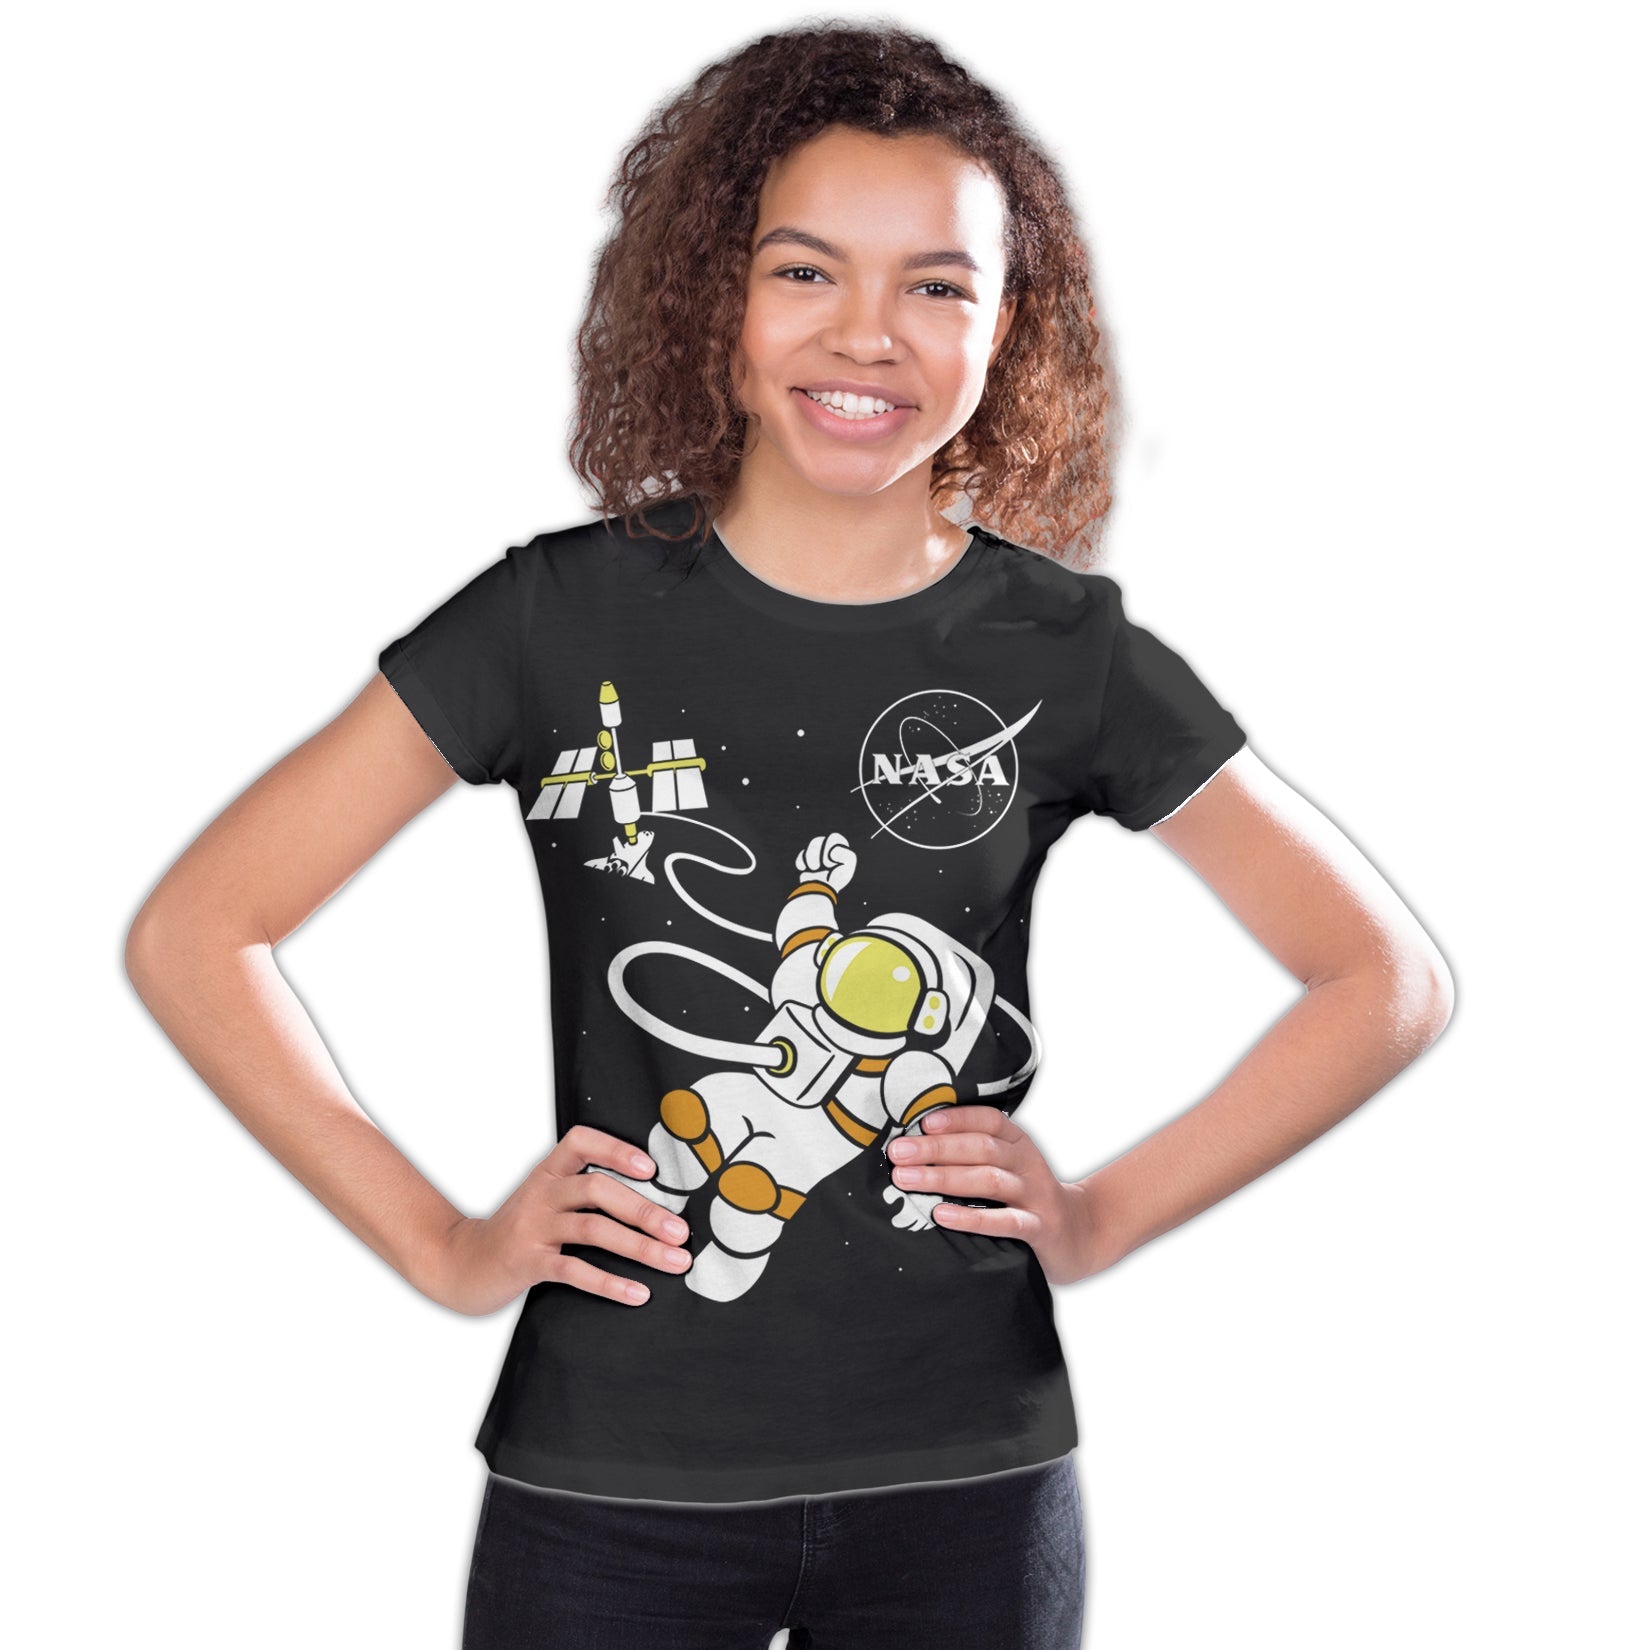 Science Space NASA Astronaut Shuttle Rocket Nerd Geek Chic Official Youth T-shirt